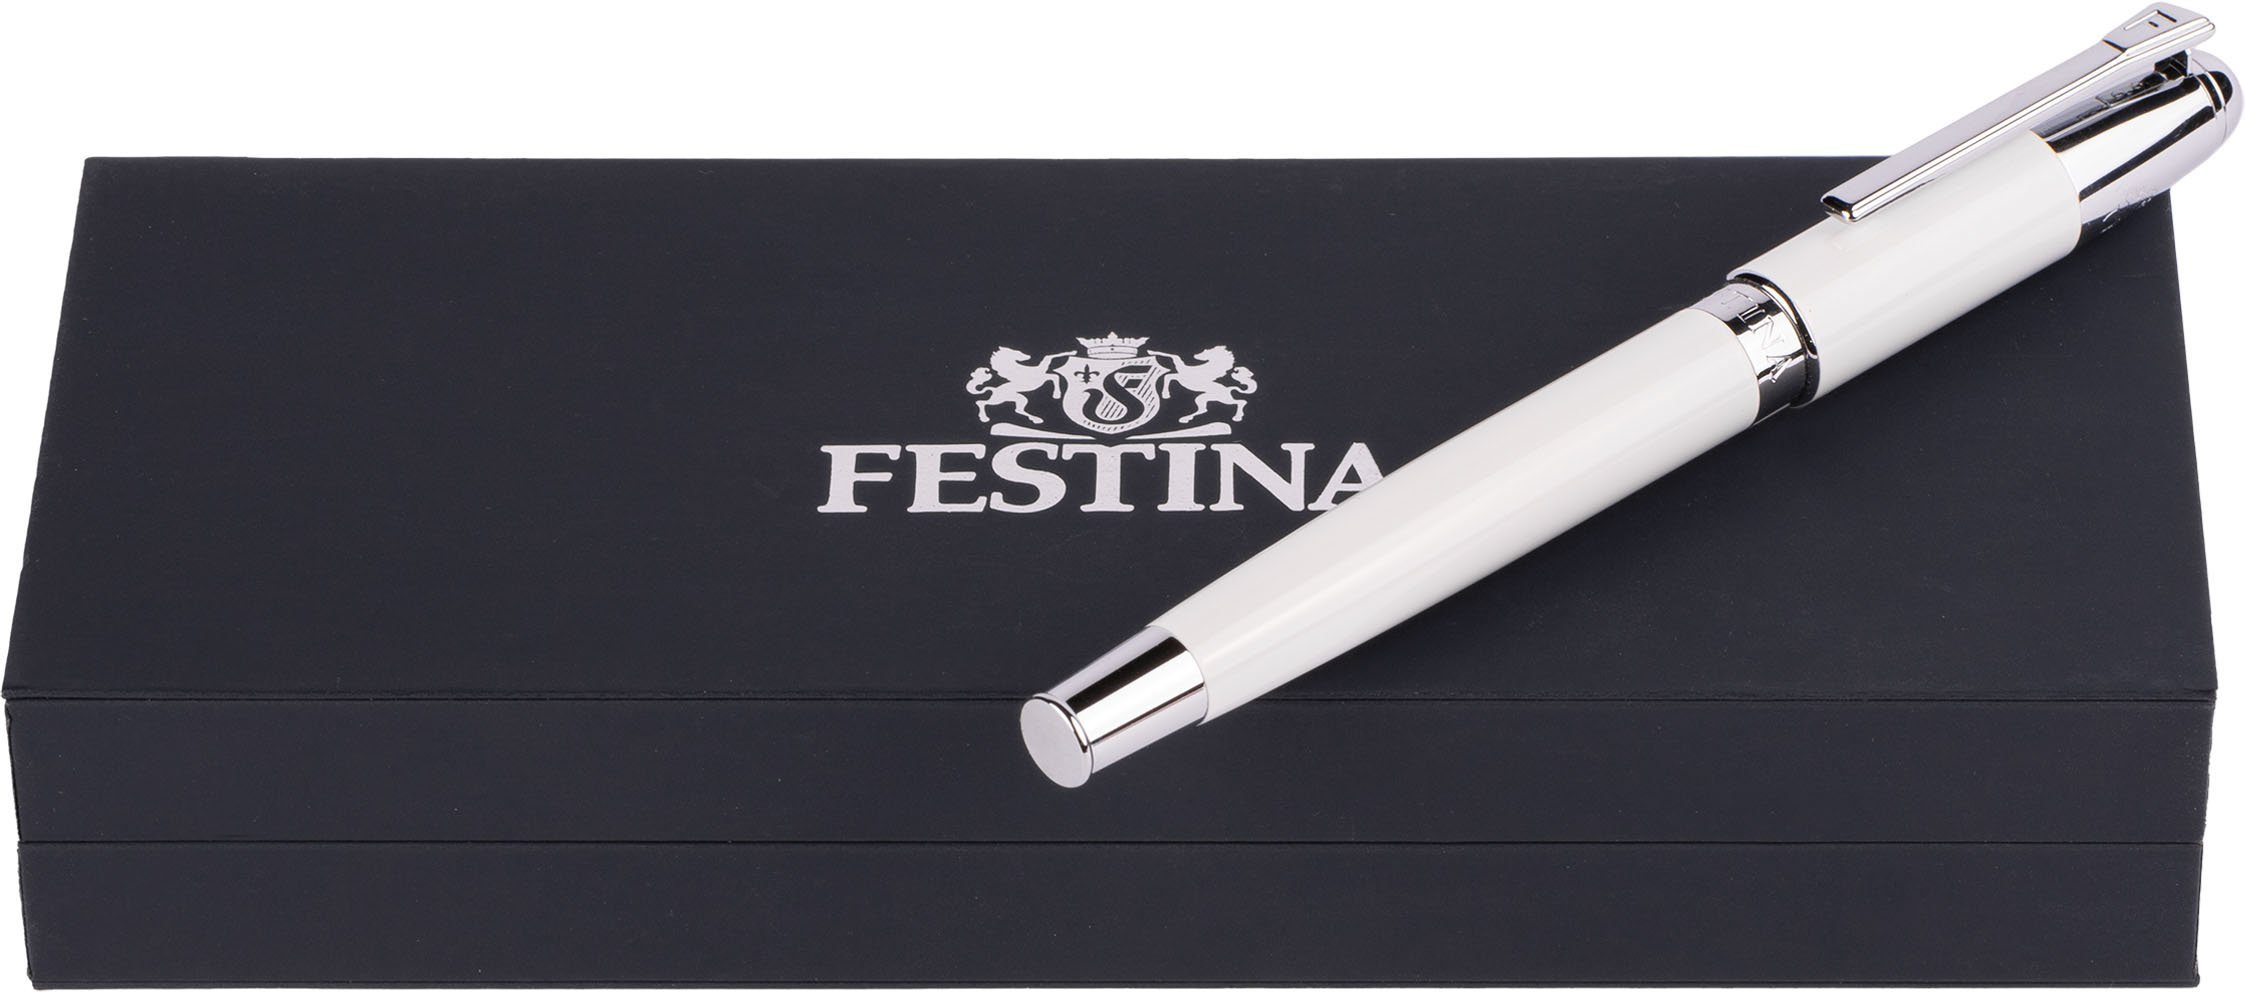 Festina Füllfederhalter als Classicals, auch Geschenk inklusive FWS2109/F, Etui, ideal